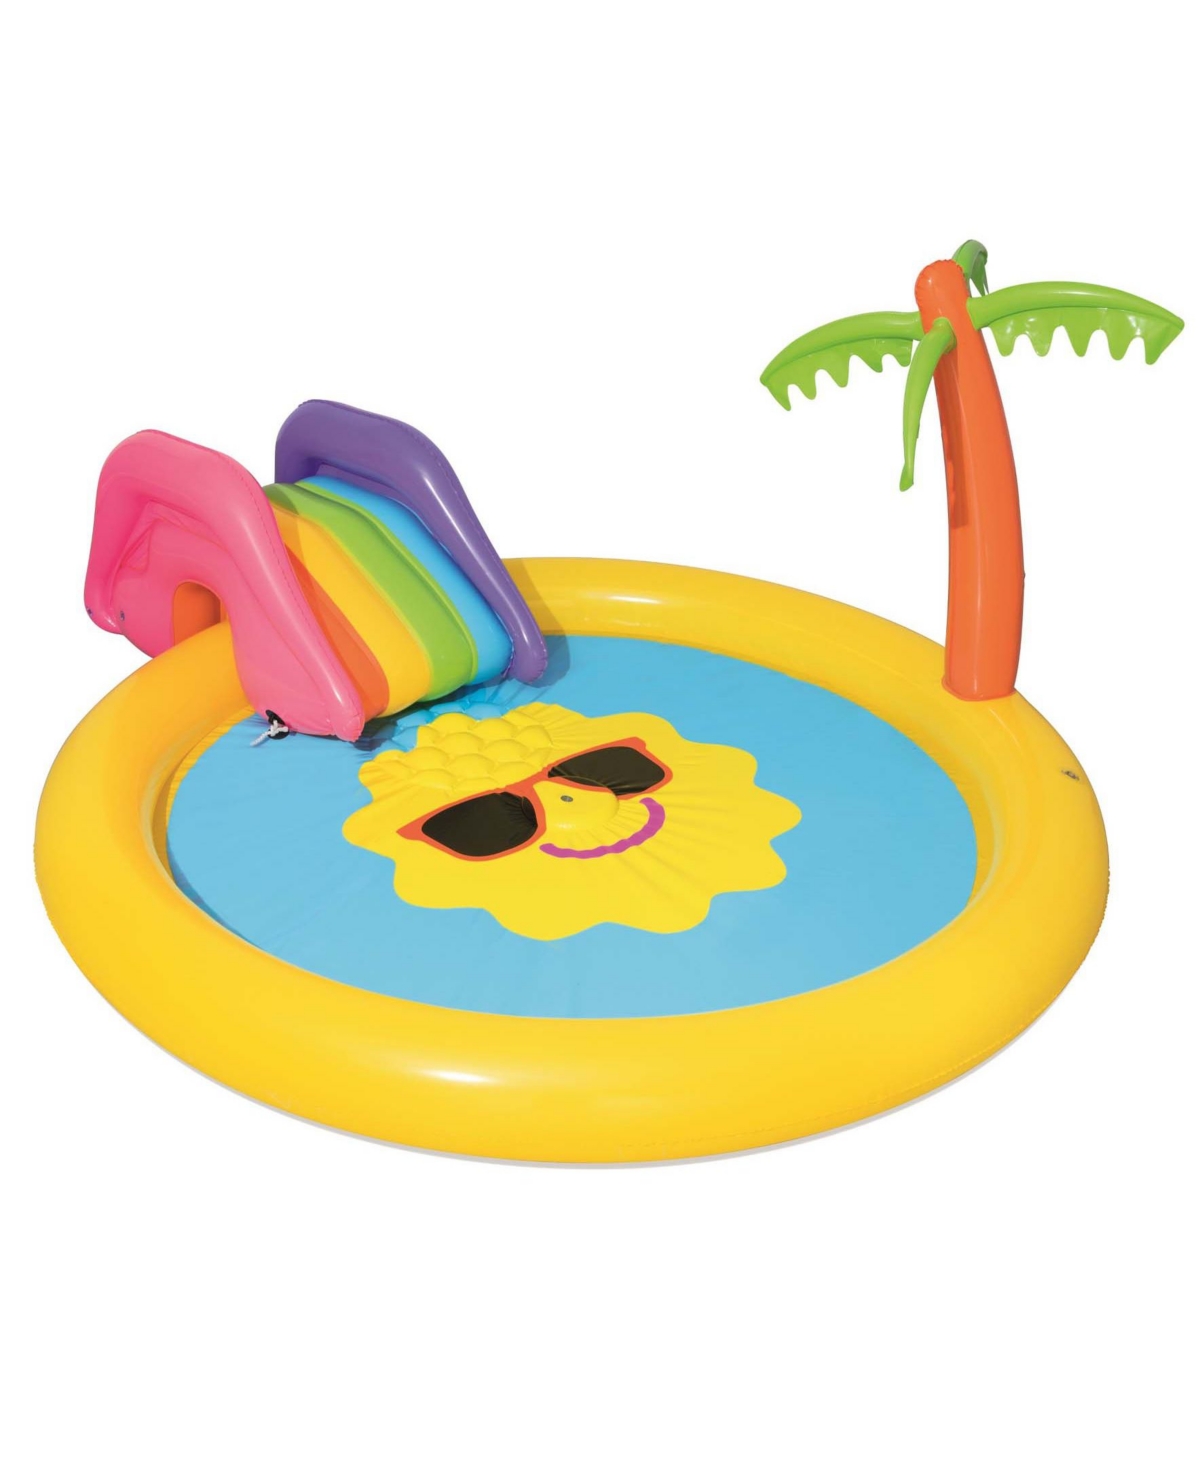 H2OGO 7'9" x 6'7" x 41" Sunny land Splash Play Pool - Multi